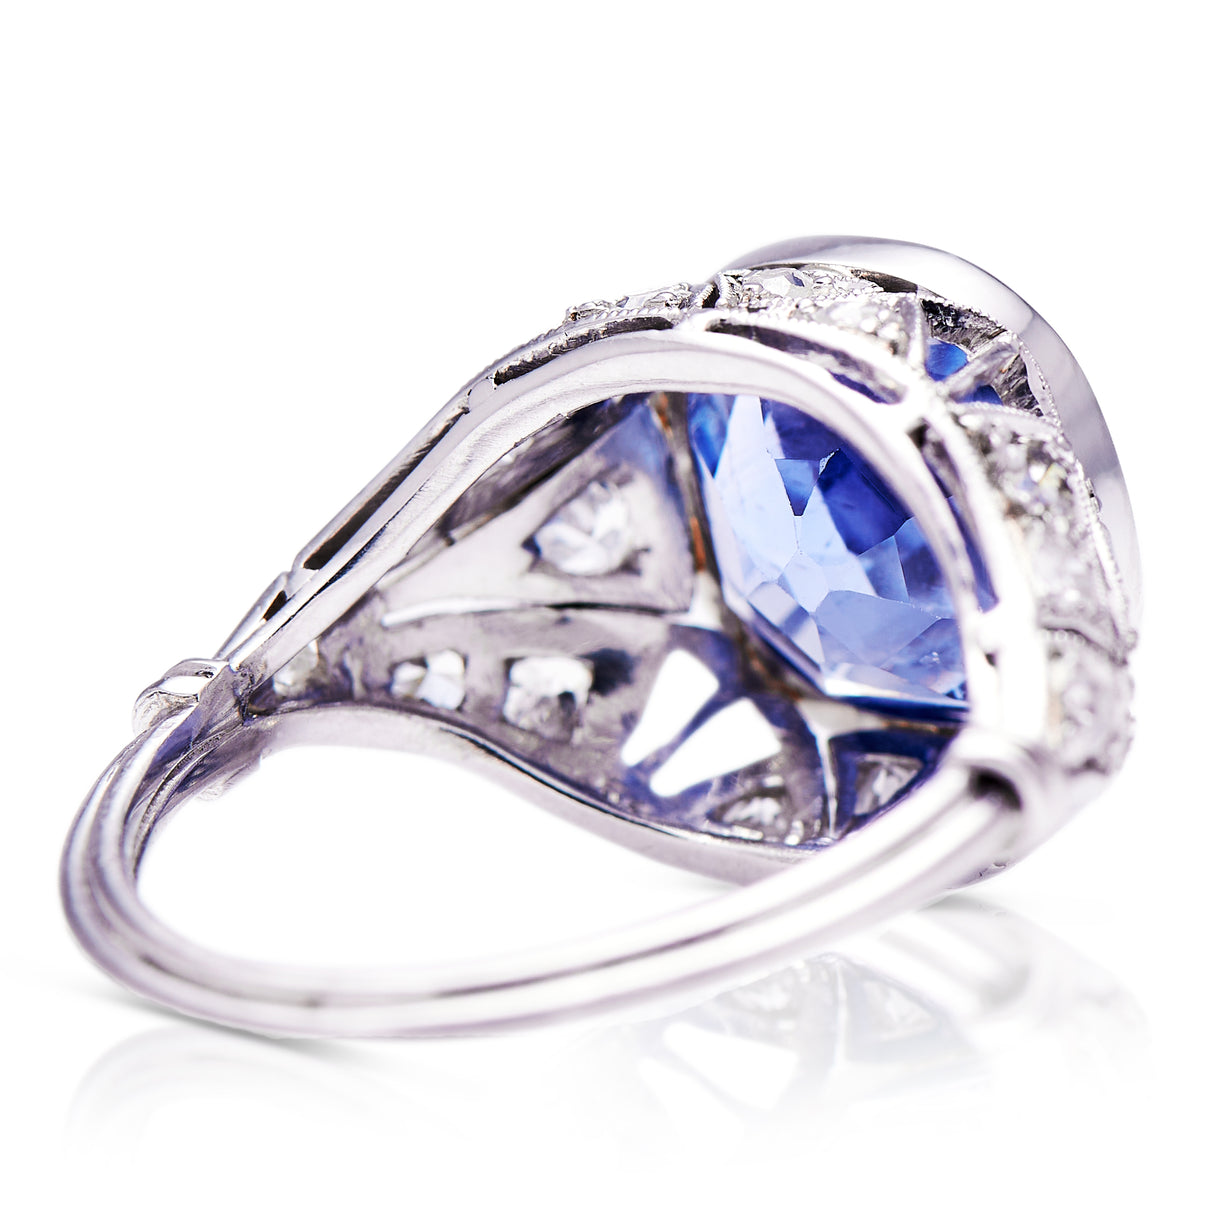 BELLE ÉPOQUE | Platinum, Sapphire and Diamond Ring